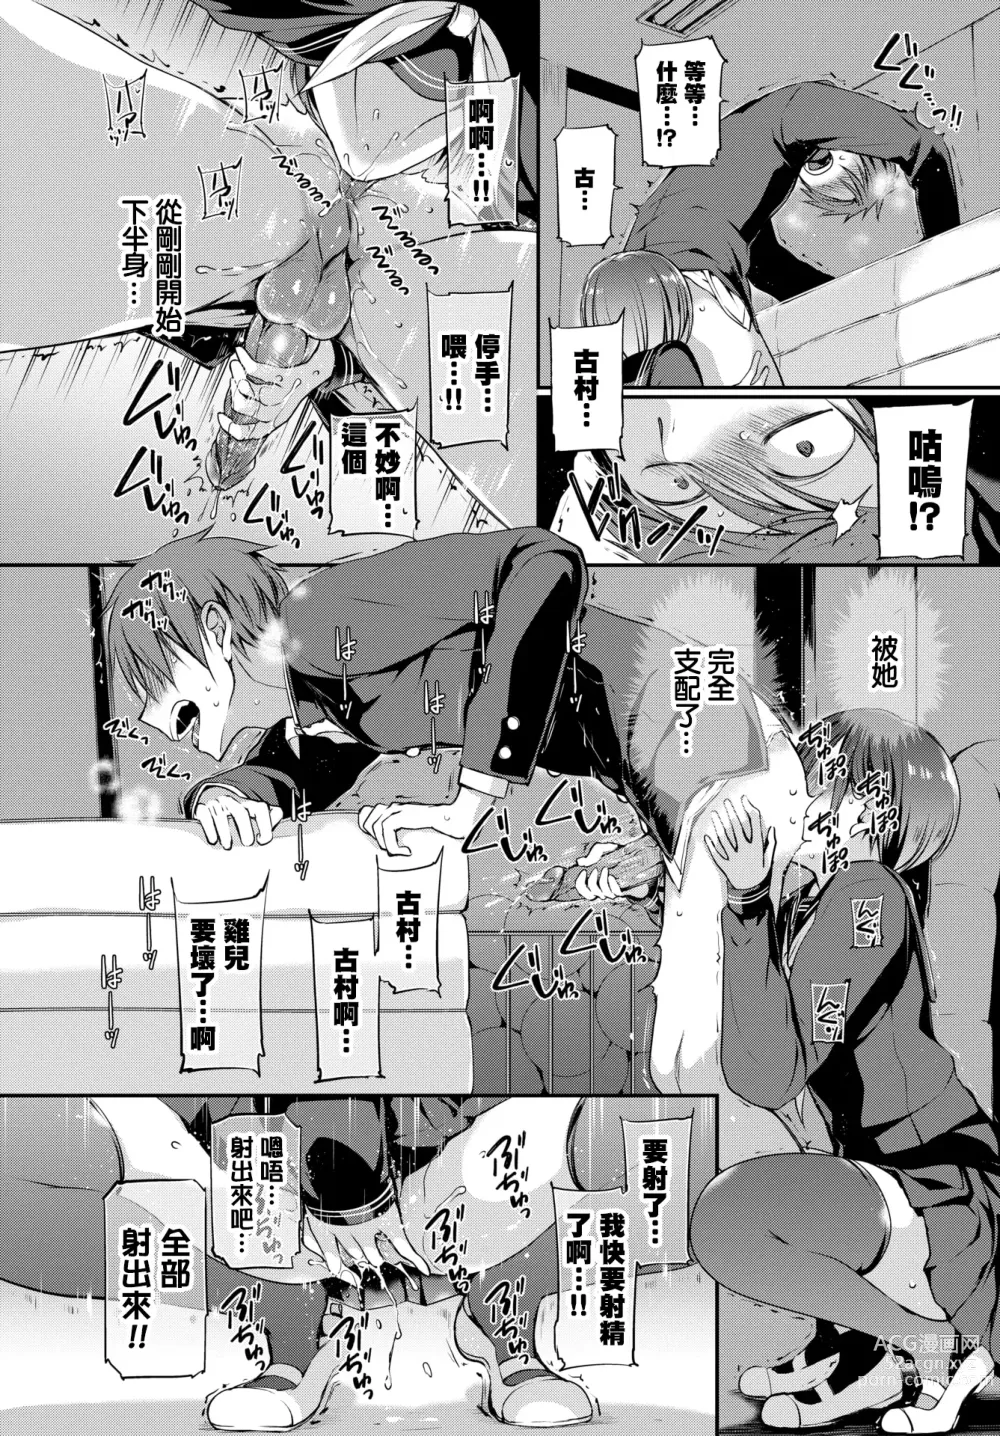 Page 22 of manga Kimi ga, Ii. (uncensored)